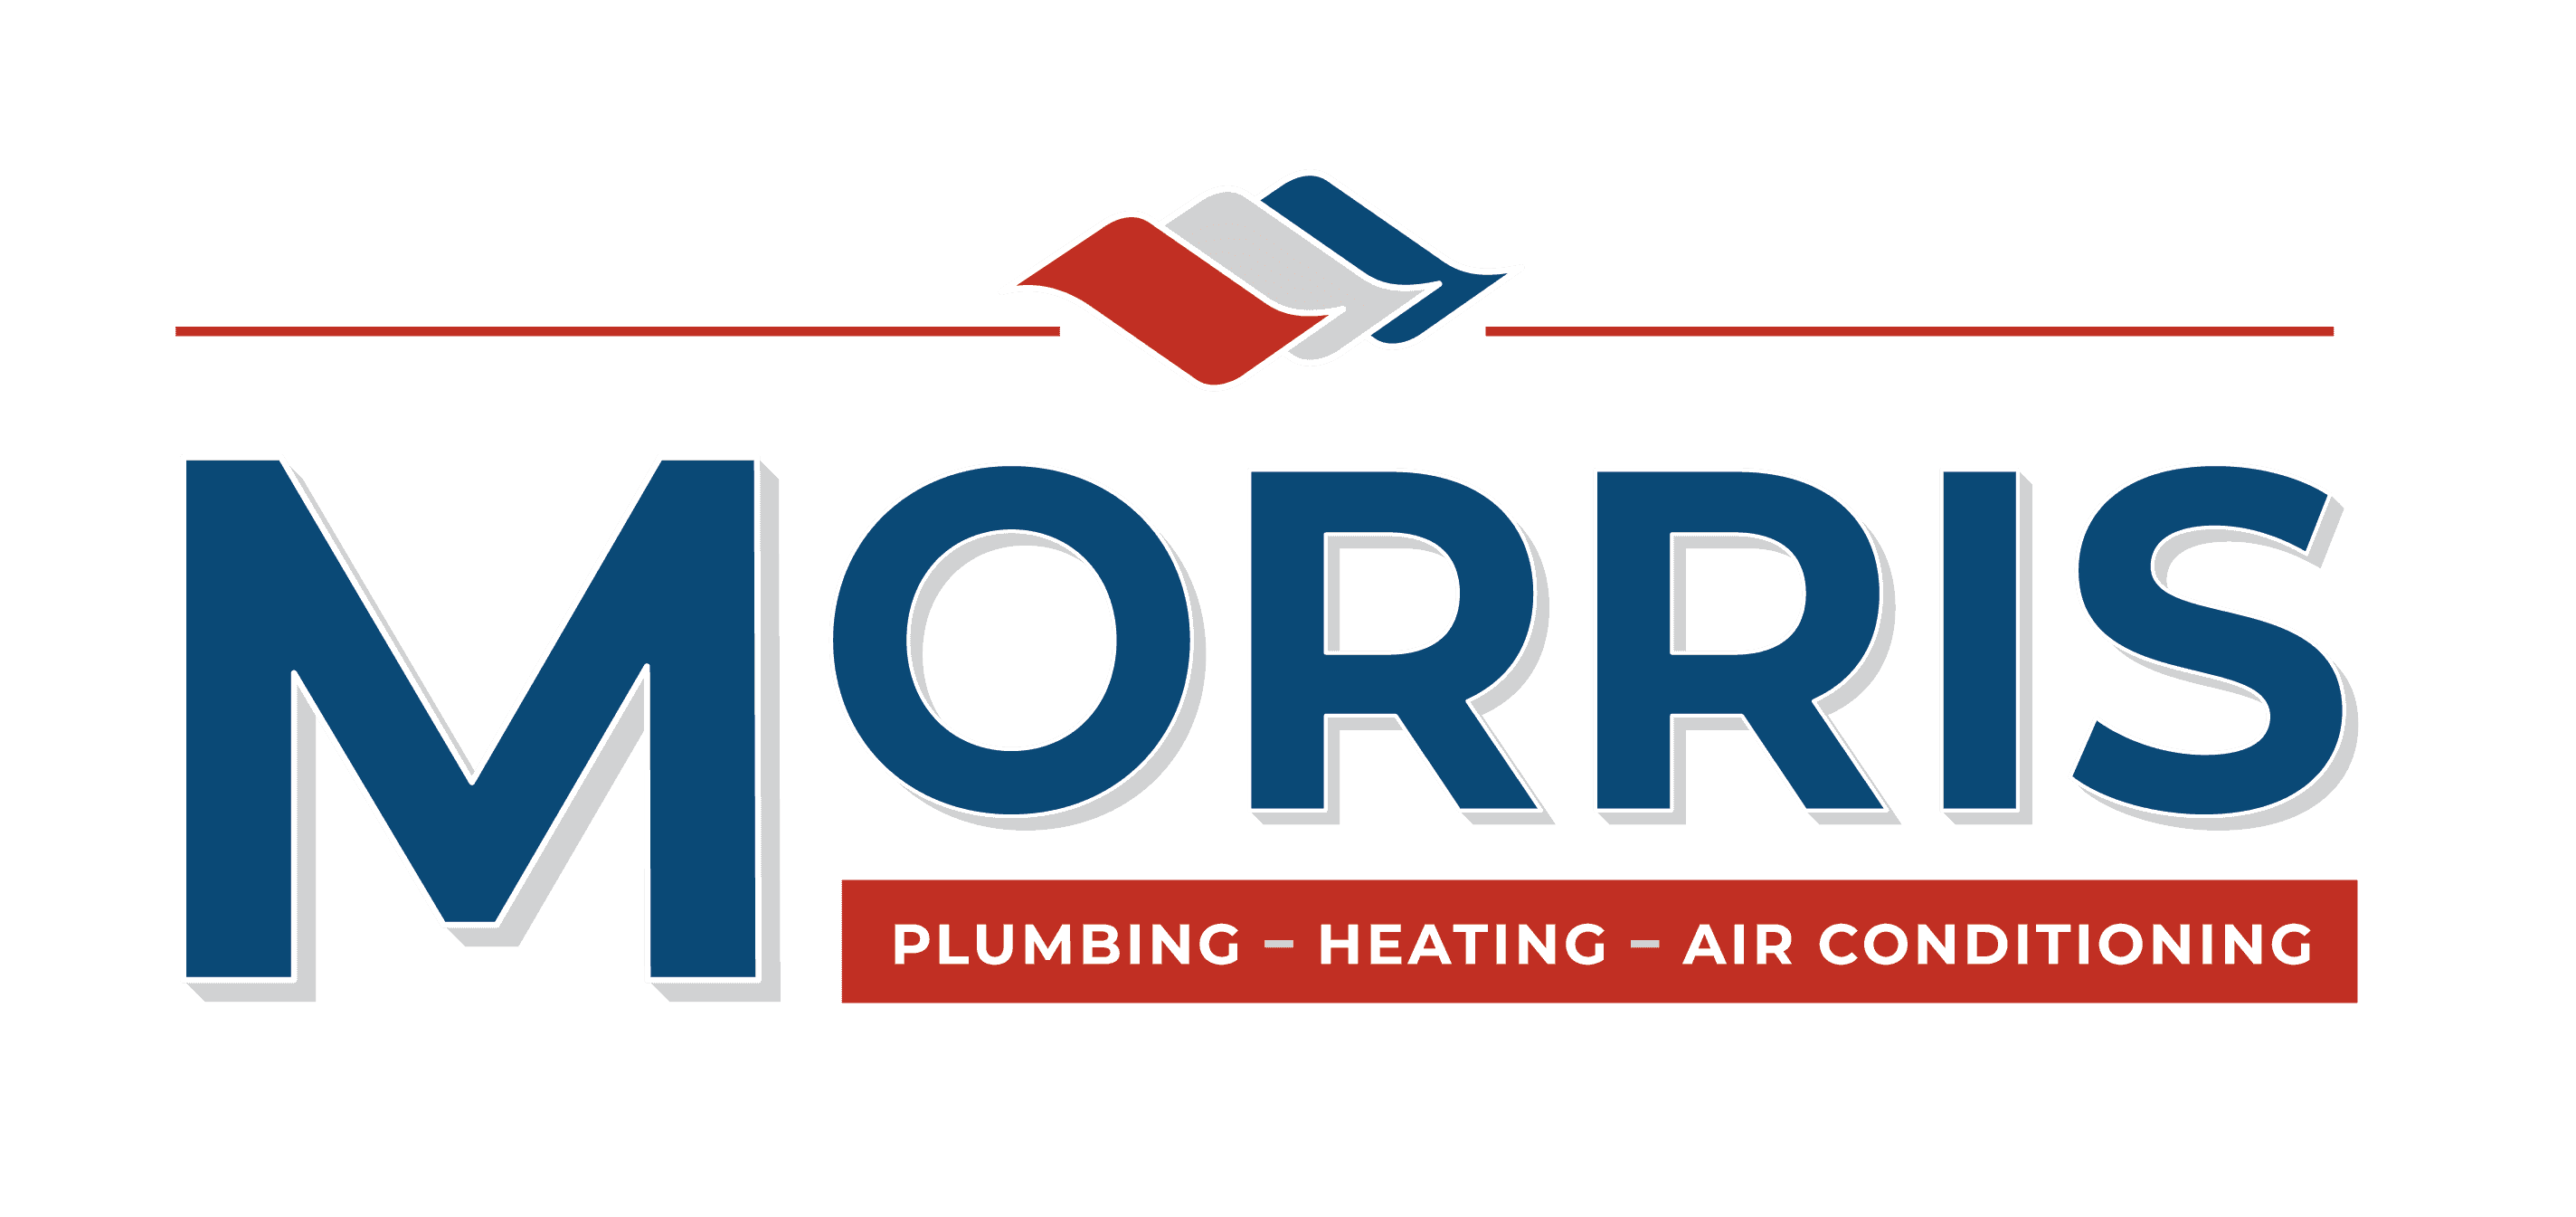 Essex County Plumbing & HVAC | Morris Plumbing, Heating & Air ...